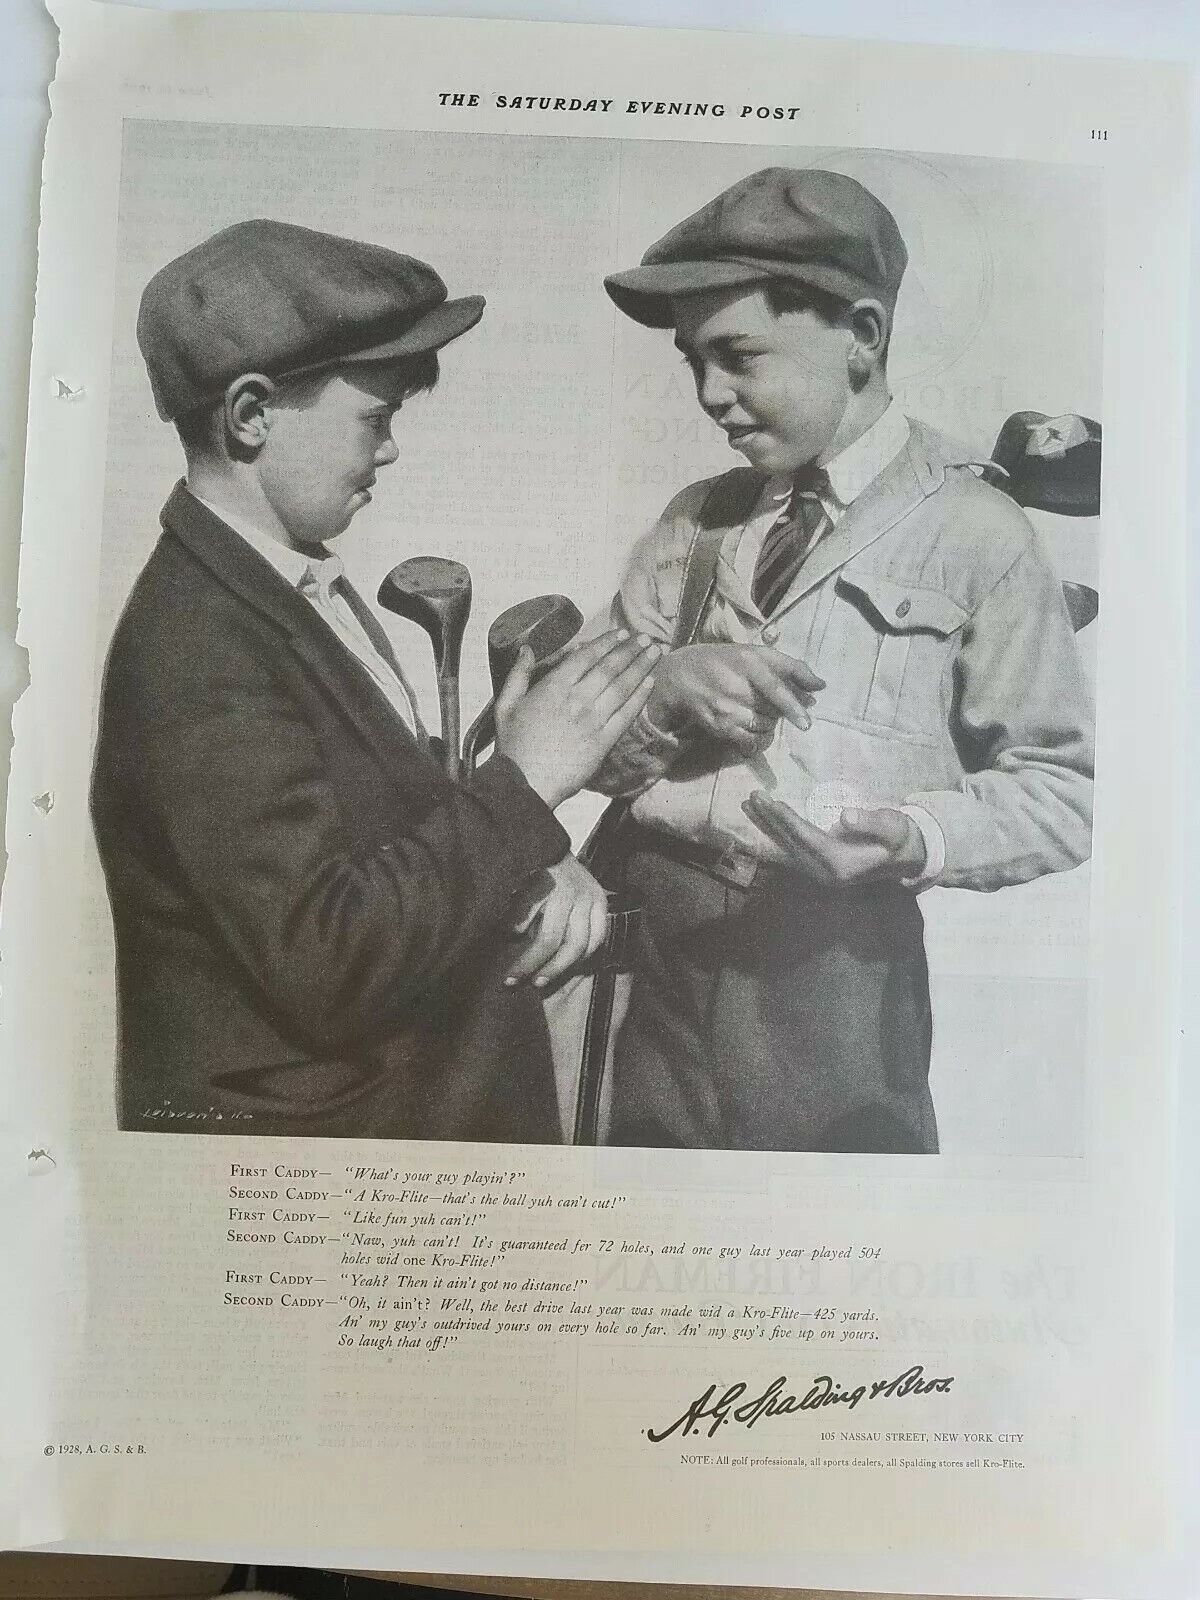 1928 AG Spalding &  Bros. vintage golf clubs boys first second caddy ad